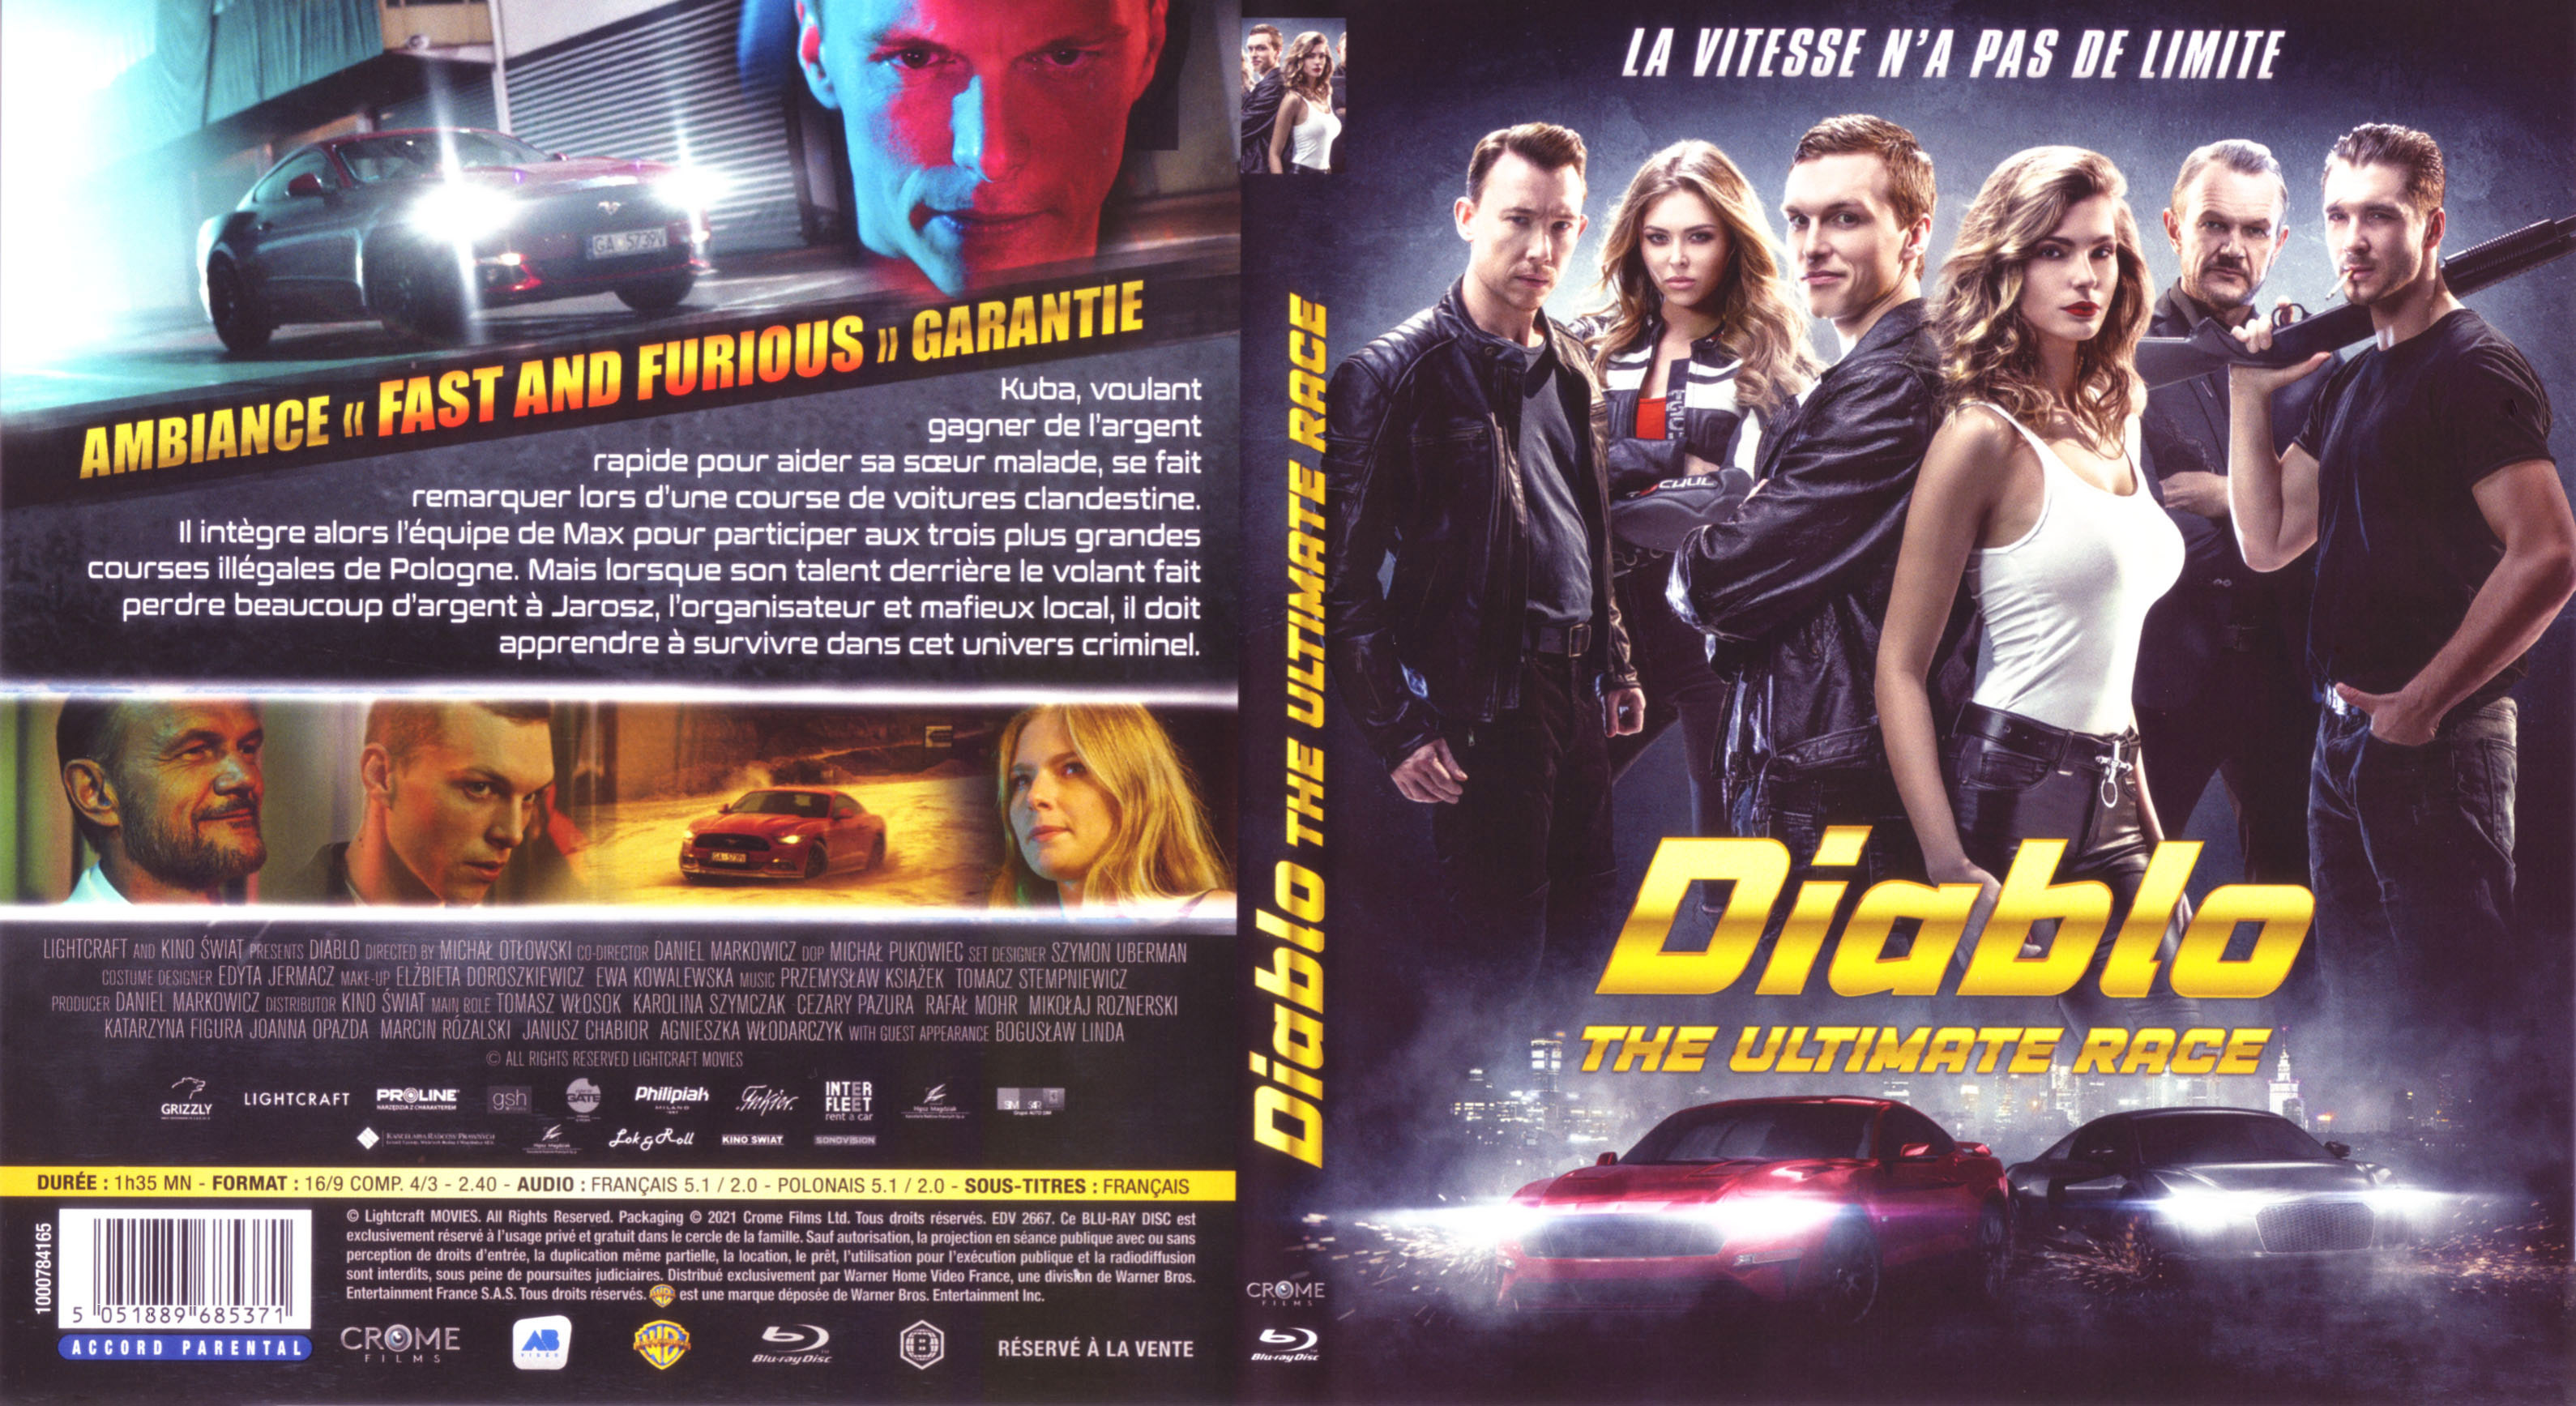 Jaquette DVD Diablo The ultimate race (BLU-RAY)